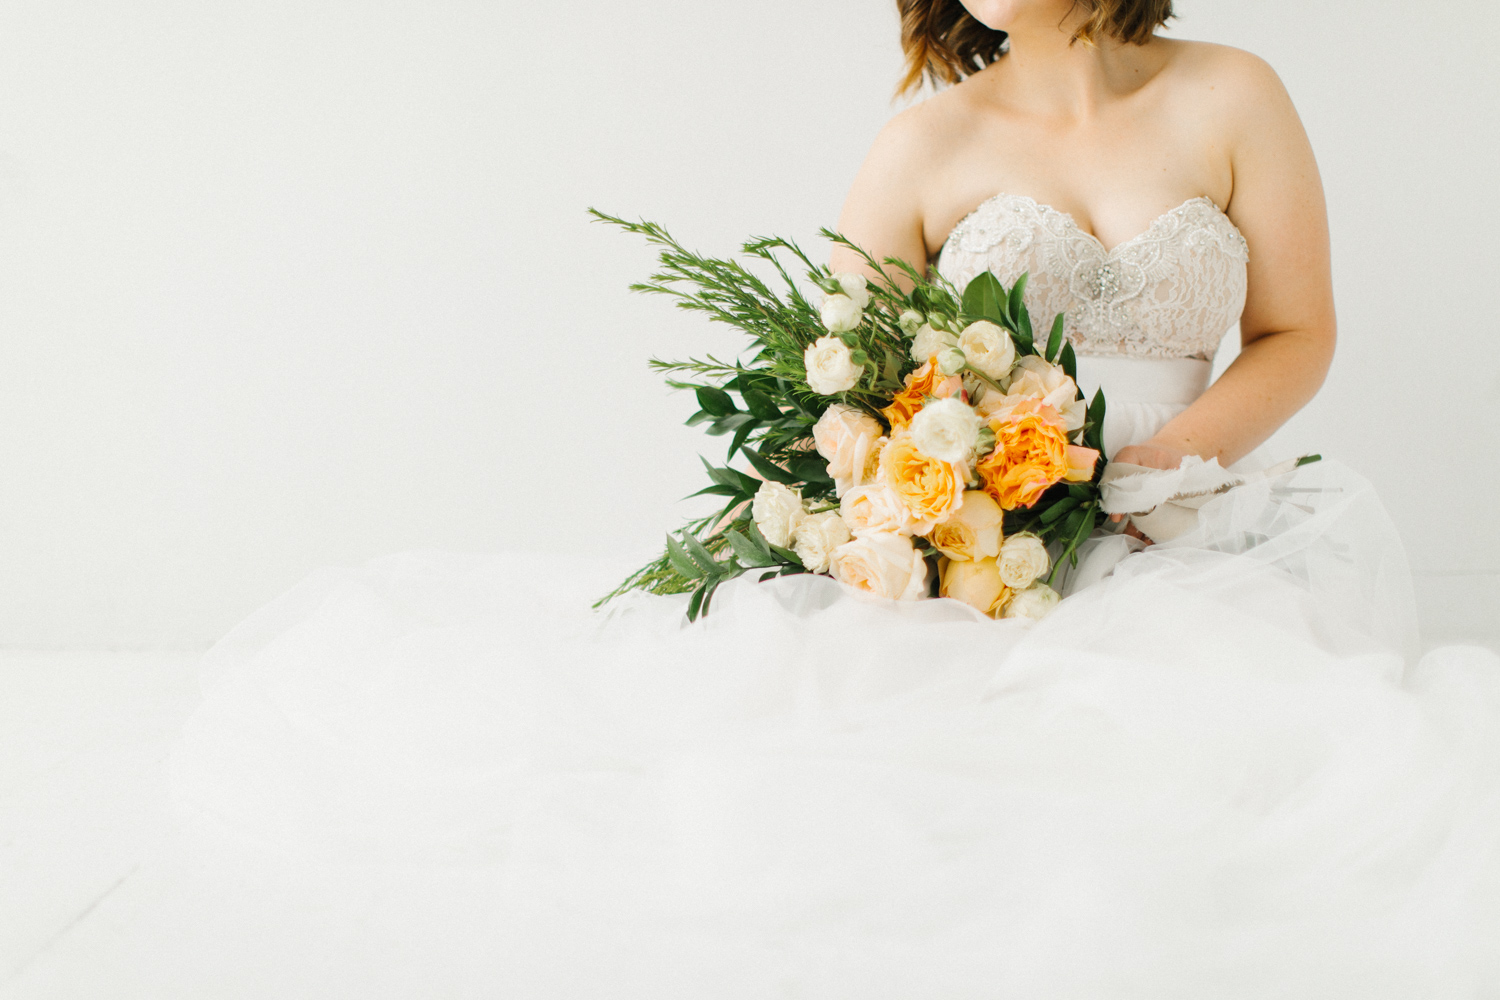 Seattle Fine Art Wedding Photographer | Seattle Downtown White Studio Bridal Session | Stunning Wedding Bouquet | Seattle Bride | Seattle Wedding | Photography Studio Space | Emma Rose Company Wedding Photography-31.jpg